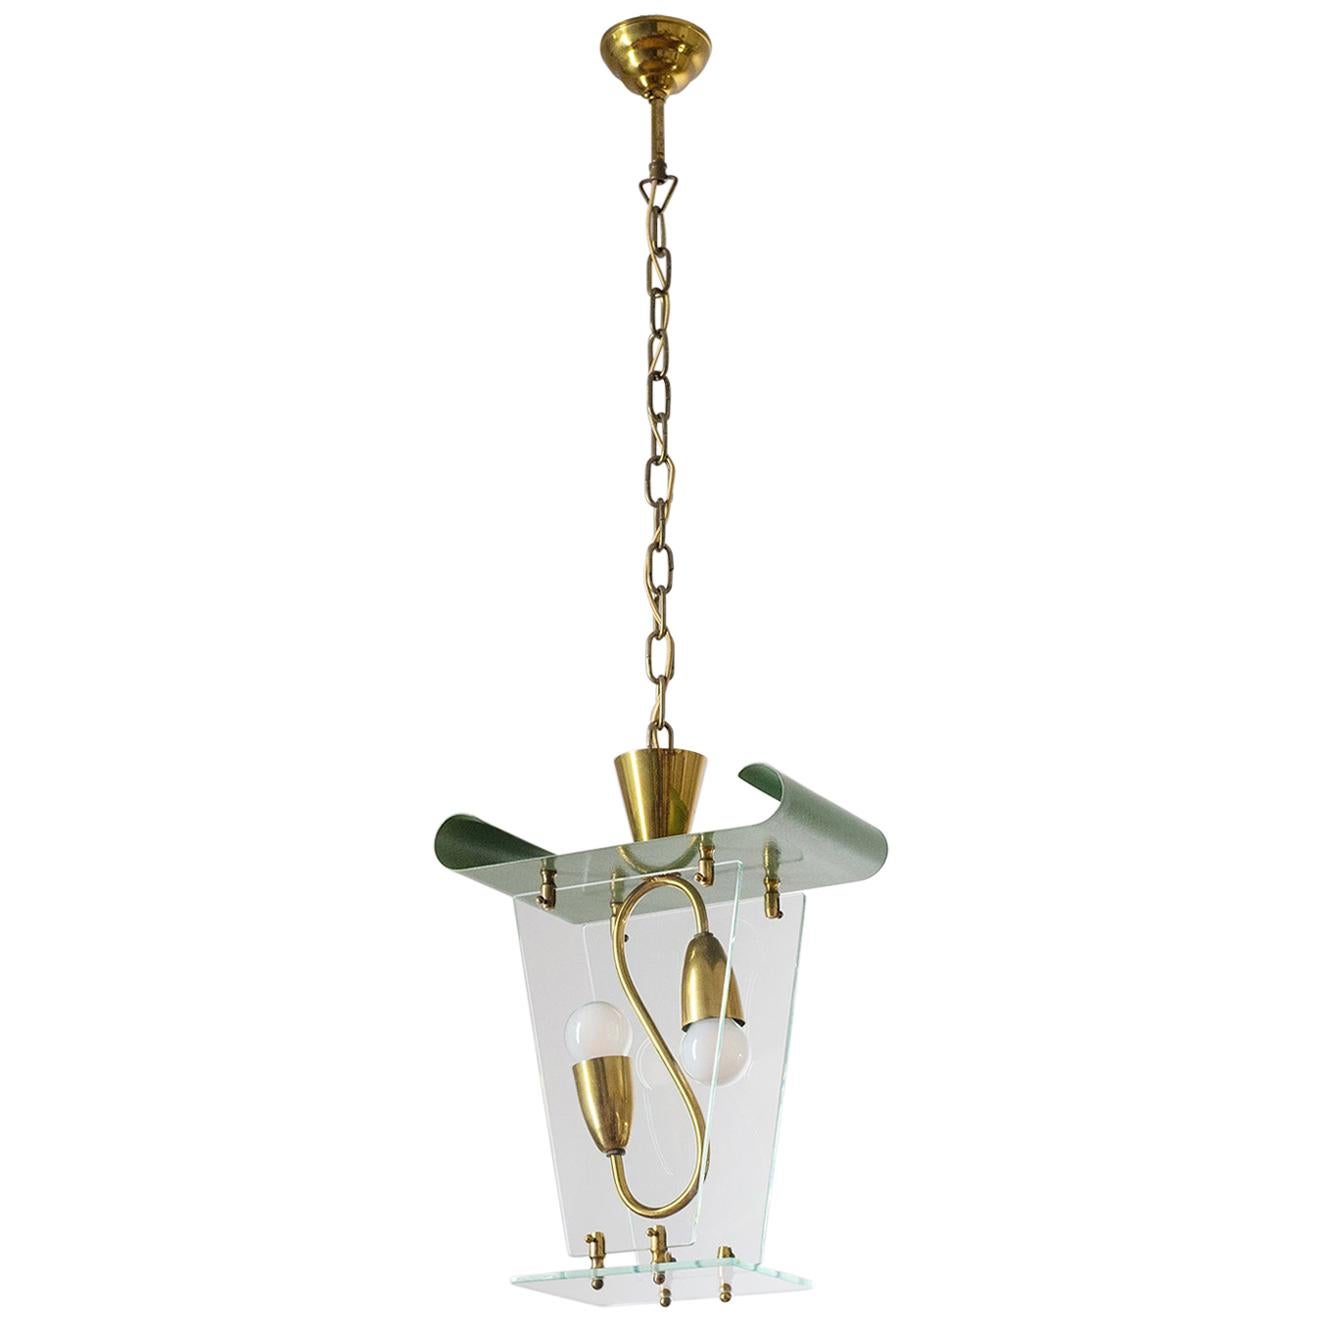 Italian Lantern, 1940s, Brass and Glass